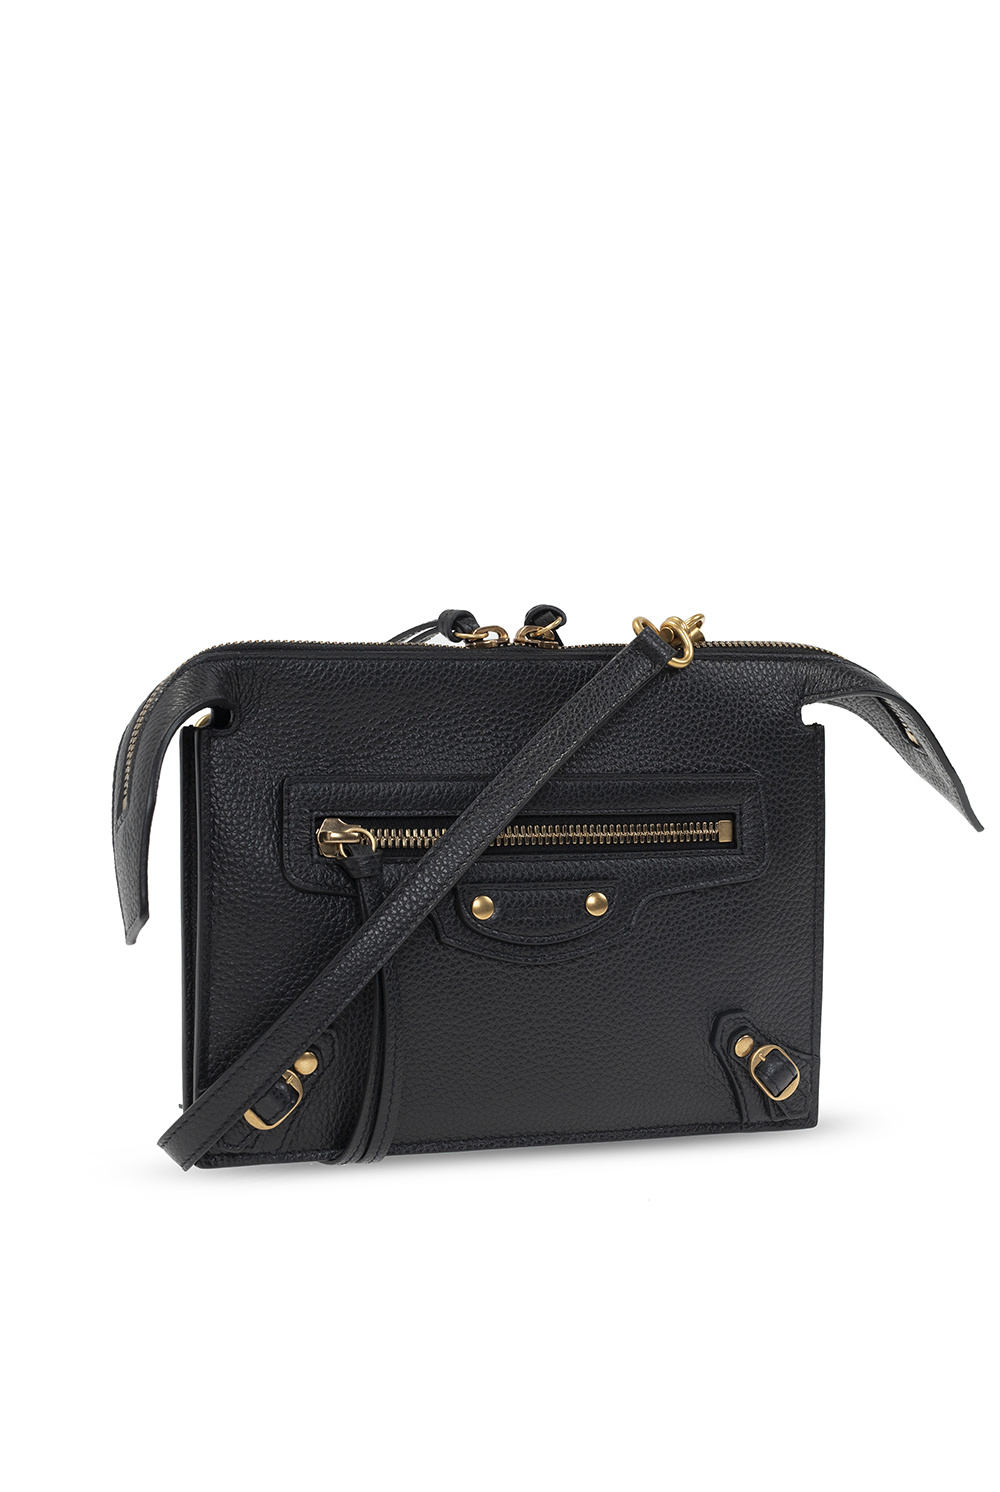 Balenciaga ‘Neo Classic’ shoulder Commovente bag